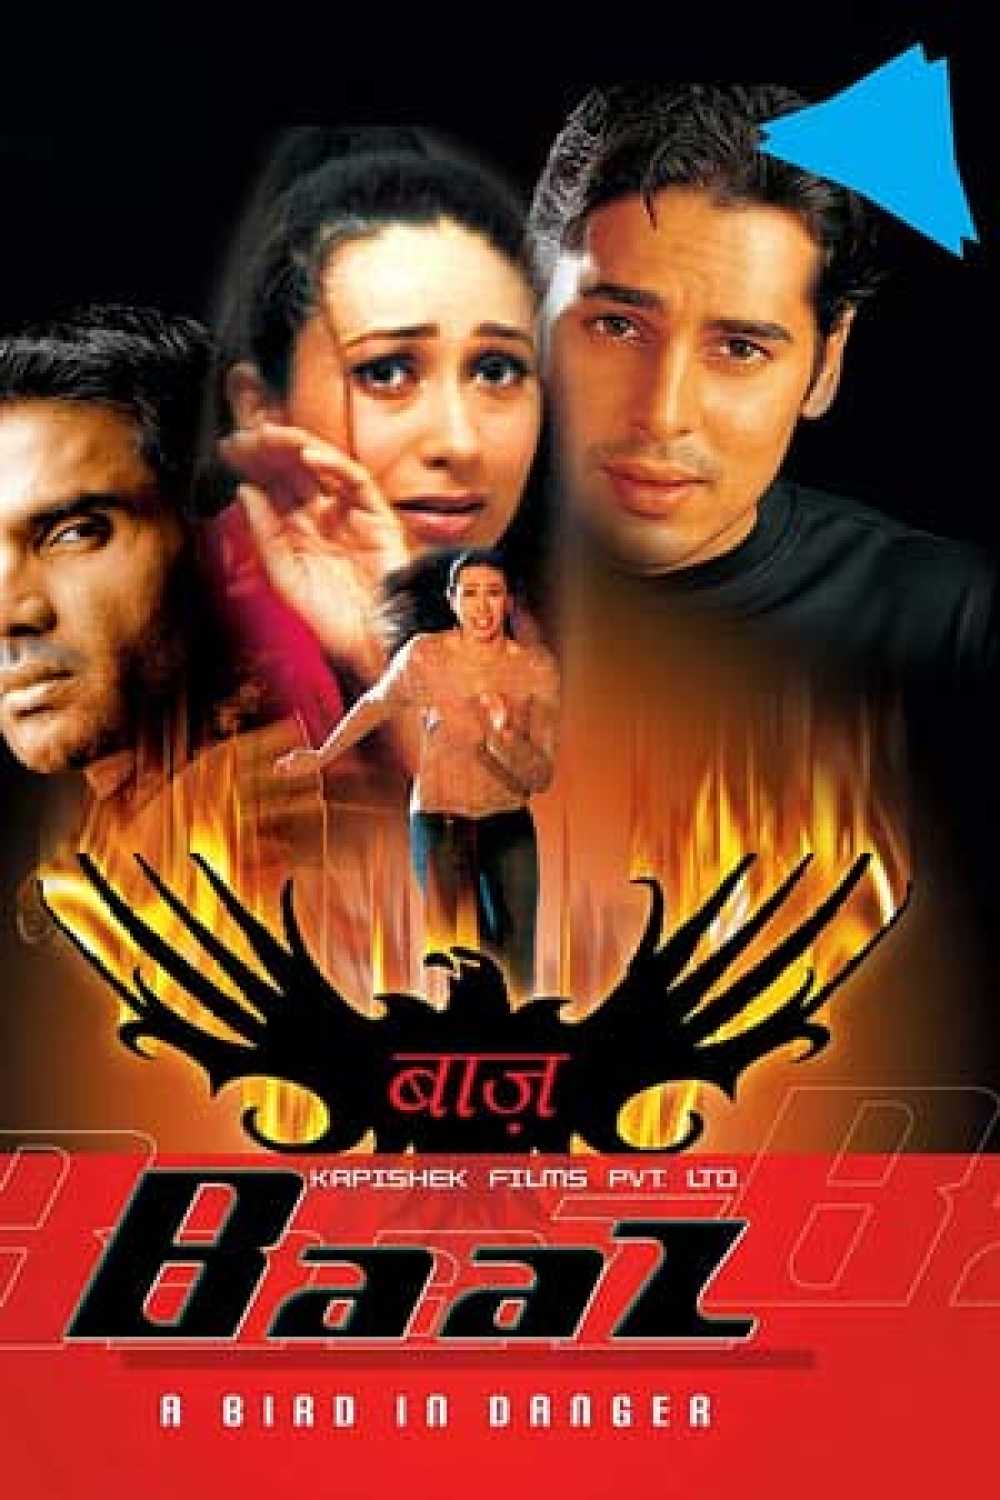 daring baaz movie download in hindi hd 720p